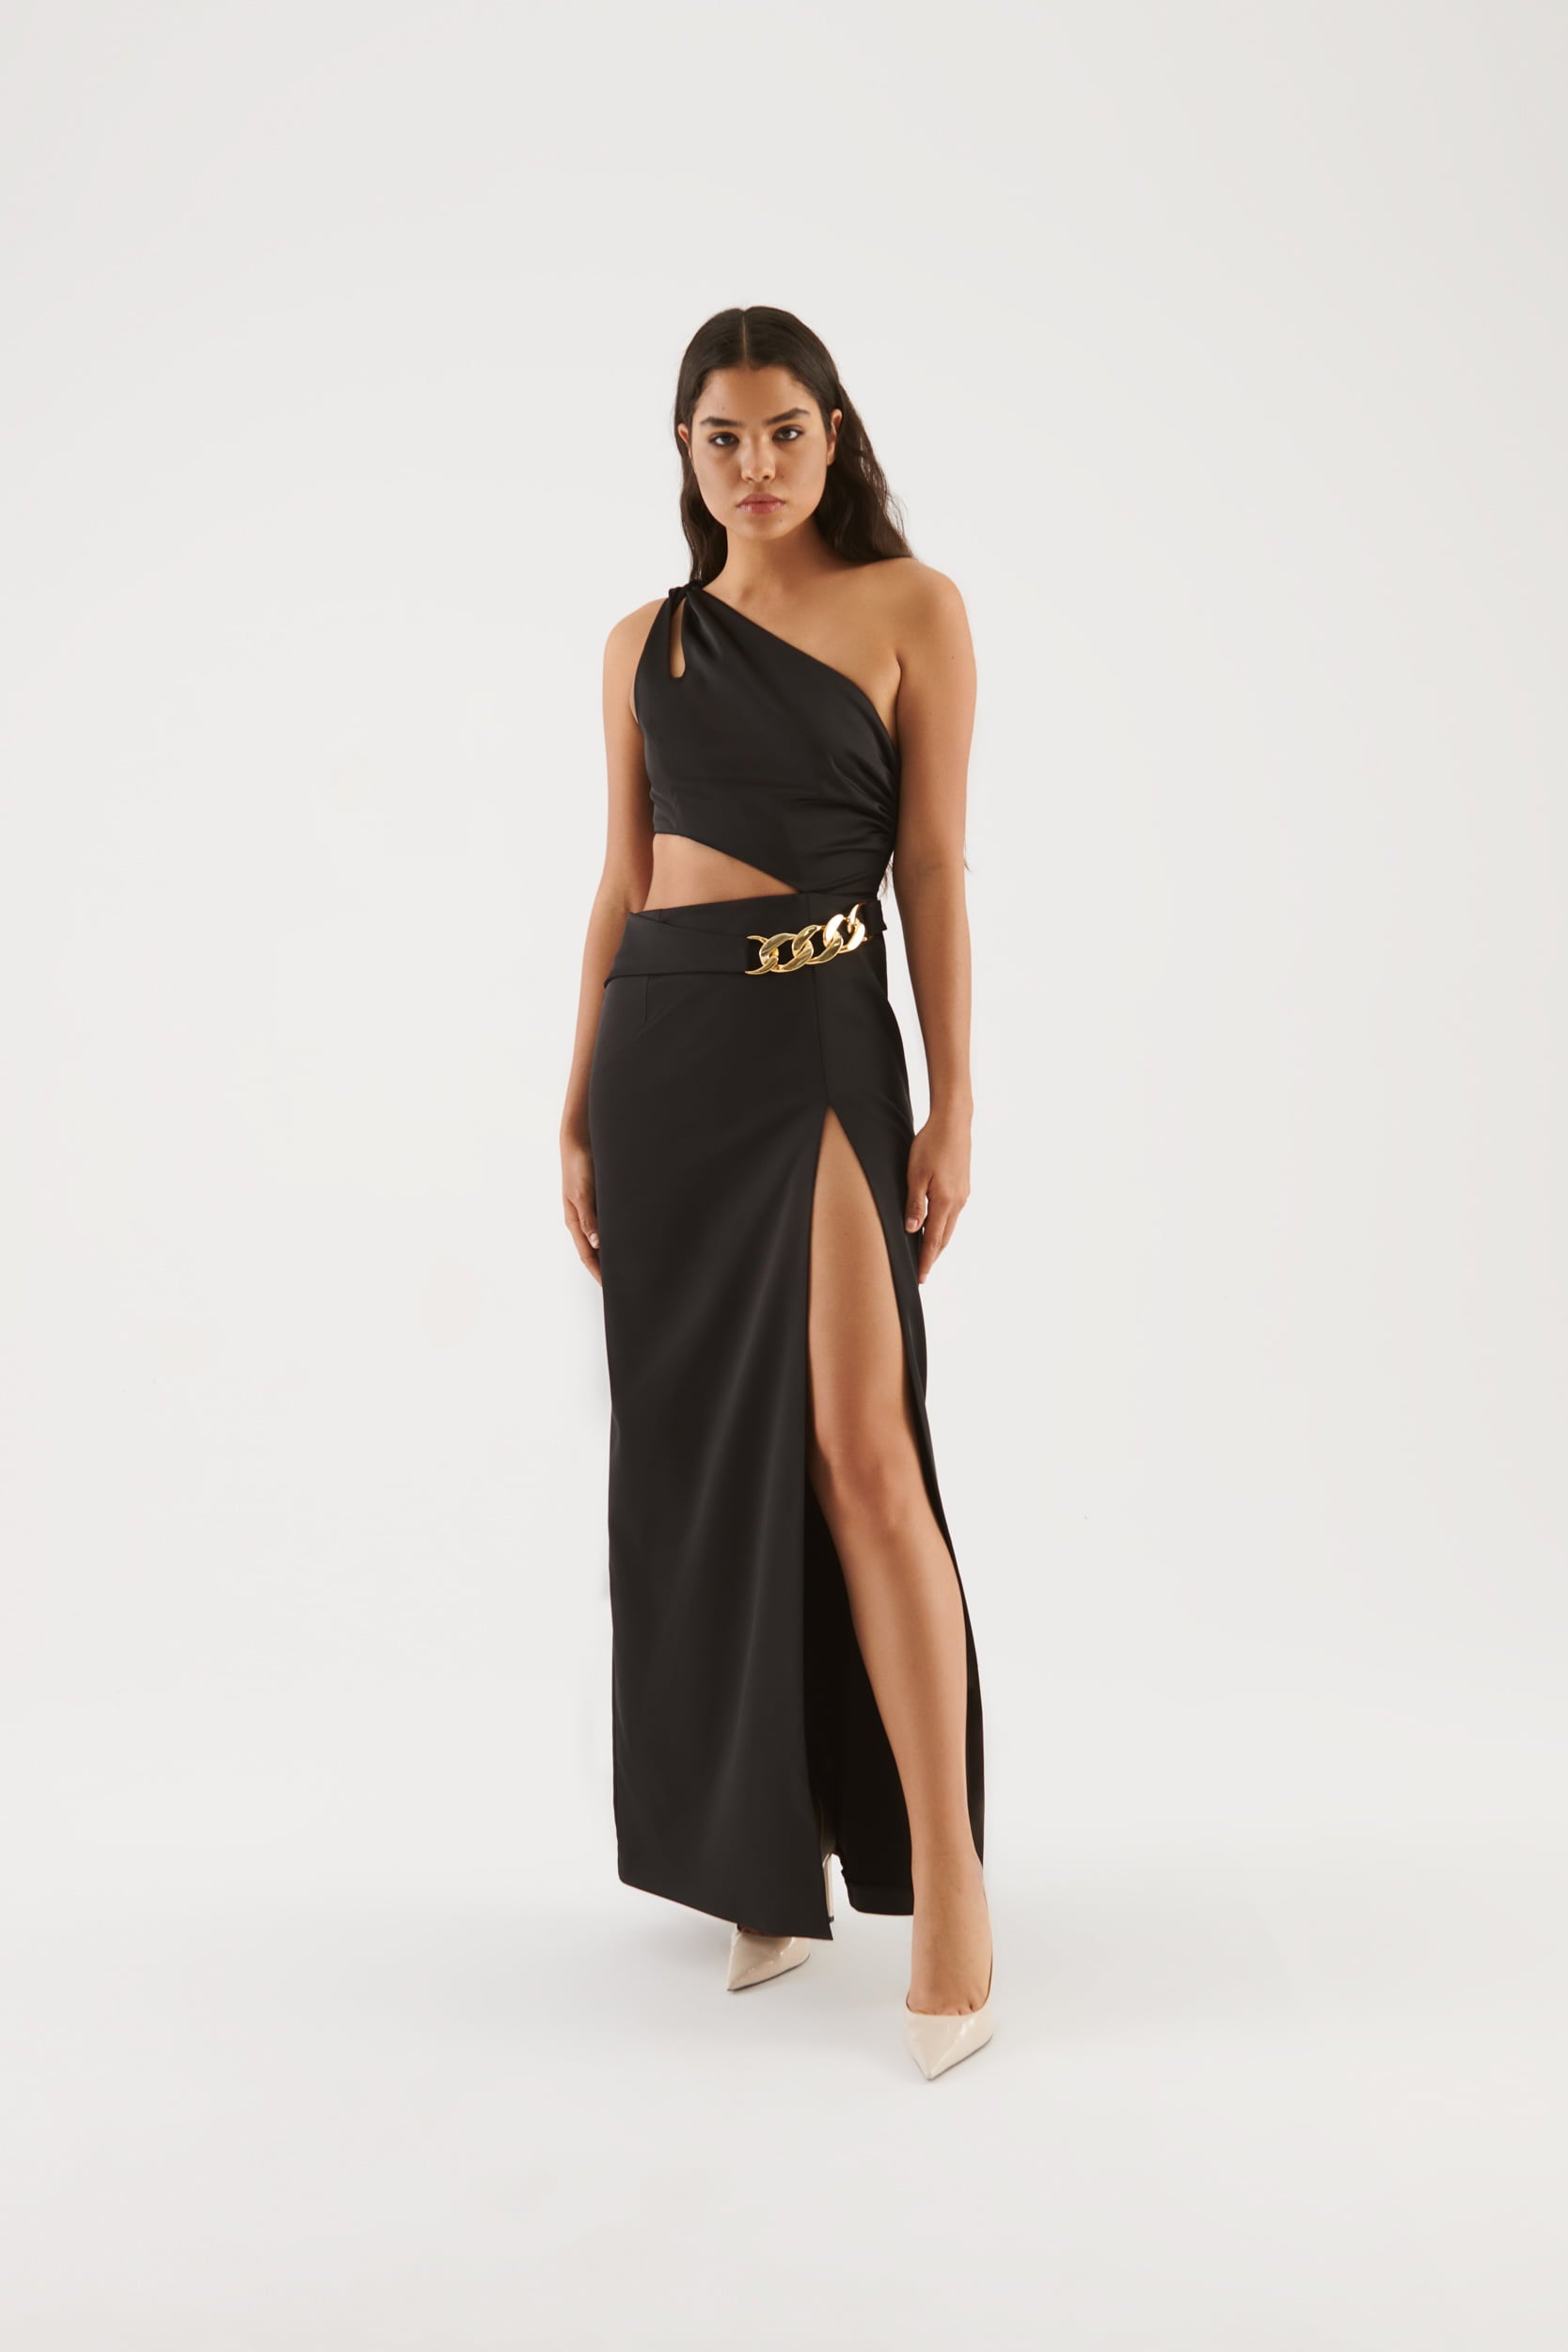 Roman Elegant Front Slit Black Formal Gown. 2